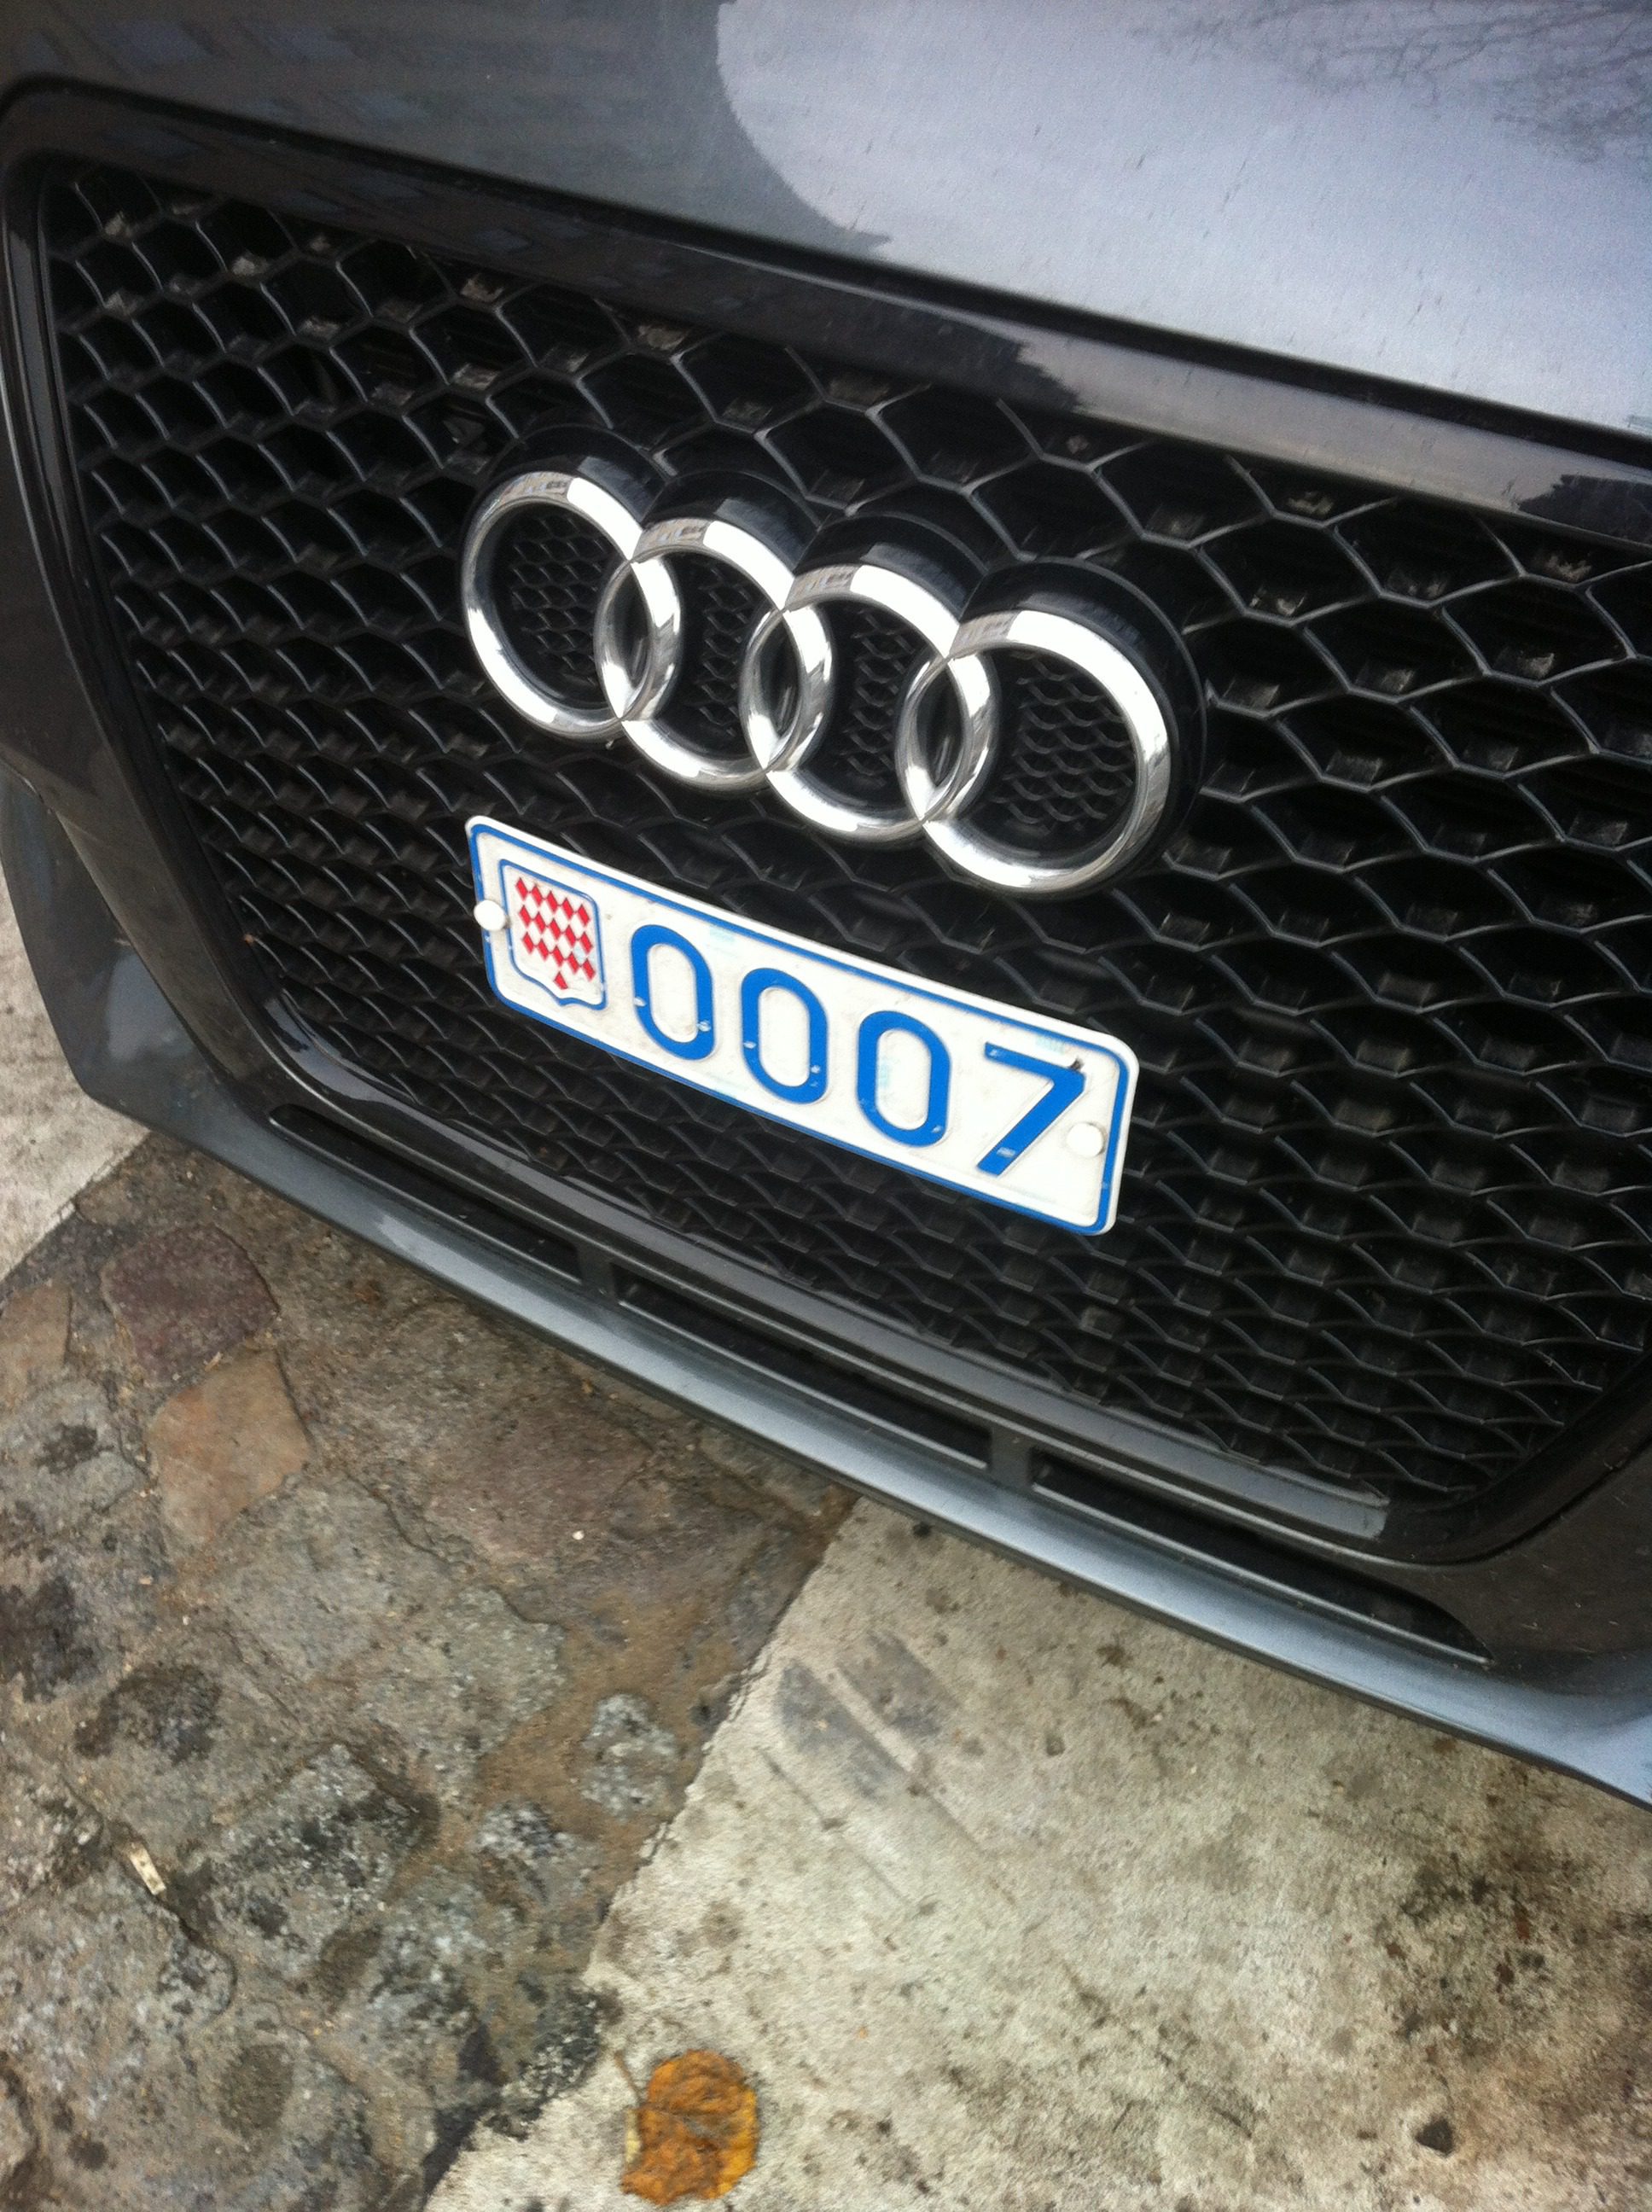 James Bond Skyfall Audi from Monaco, in Paris, The Myndset Brand strategy